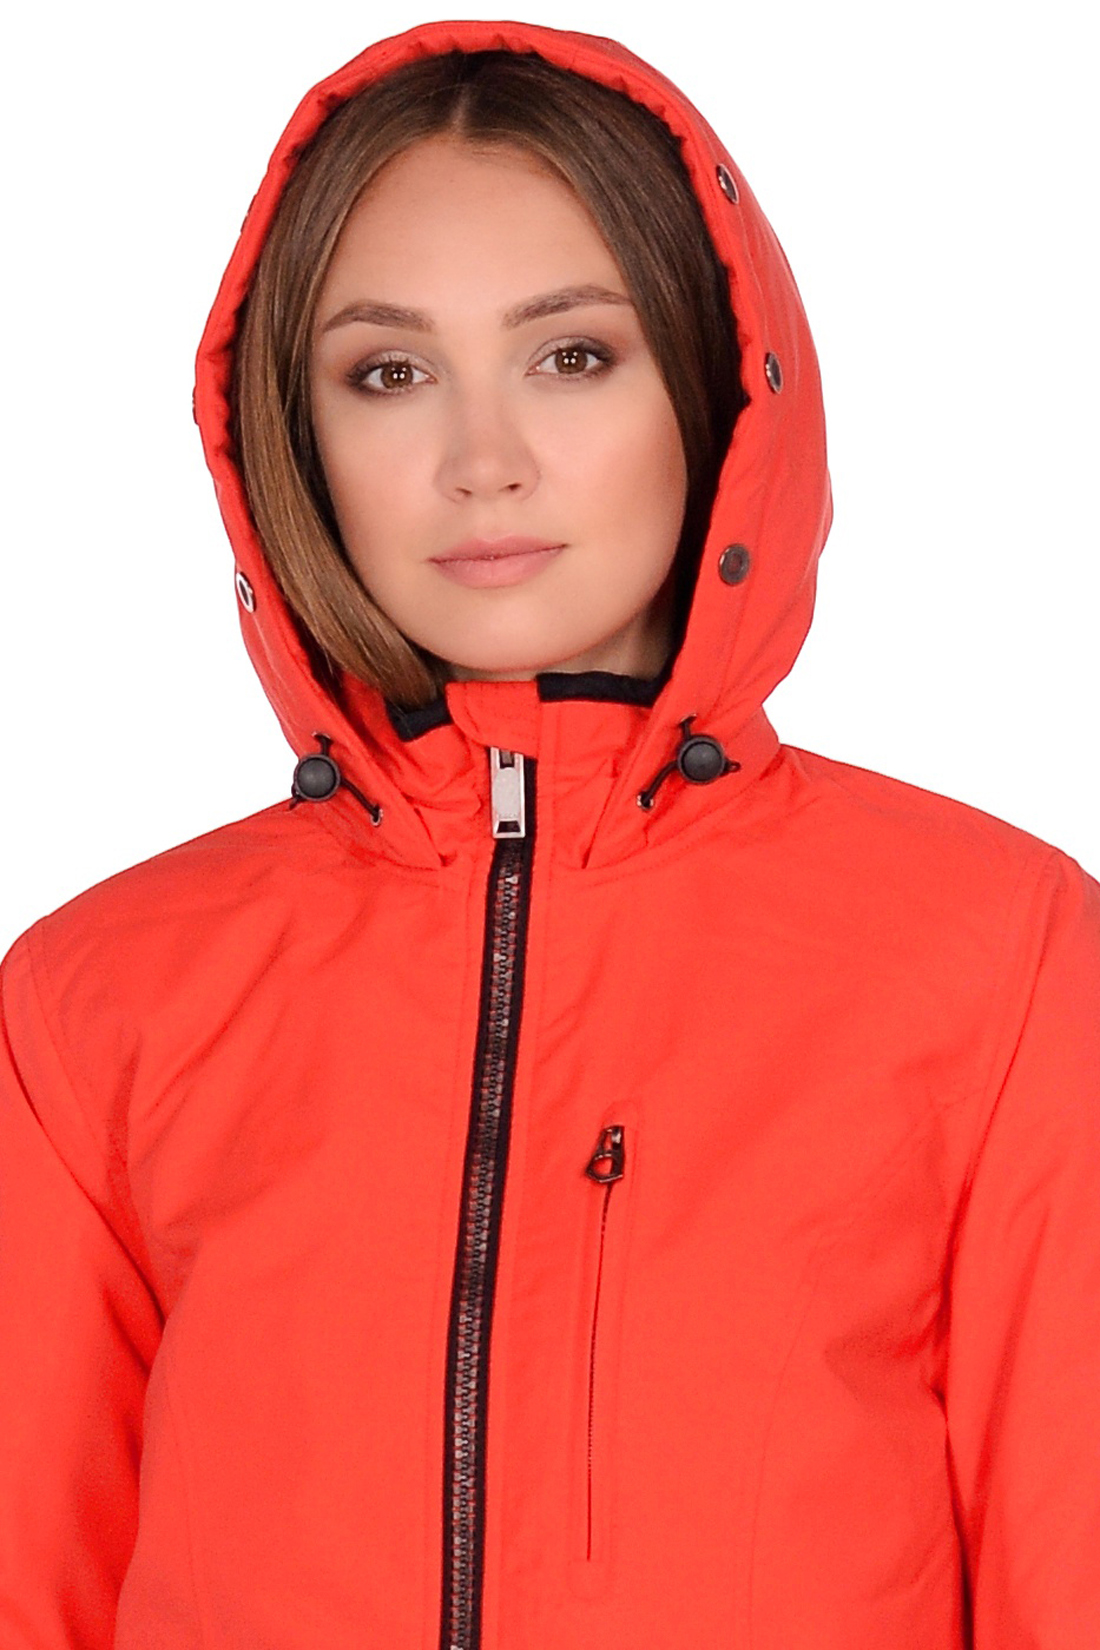 Куртка со стёганой подкладкой (арт. baon B038532), размер XXL, цвет красный Куртка со стёганой подкладкой (арт. baon B038532) - фото 2